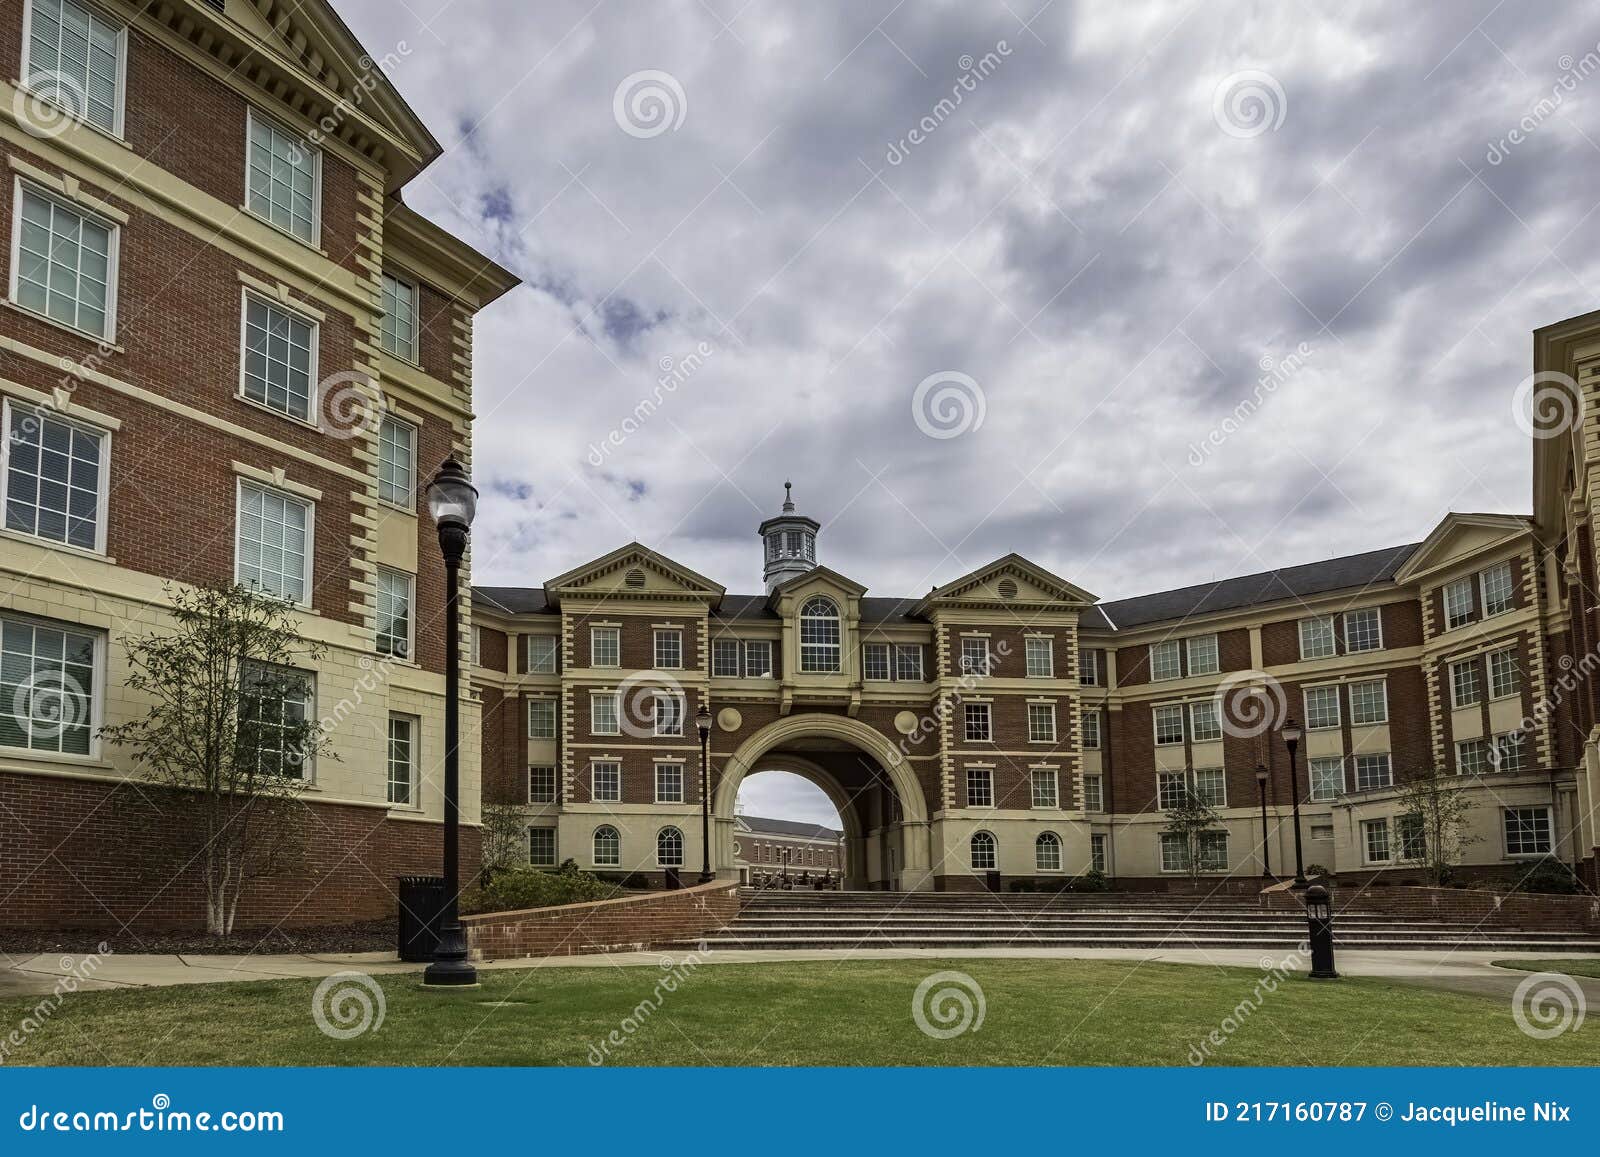 Troy university